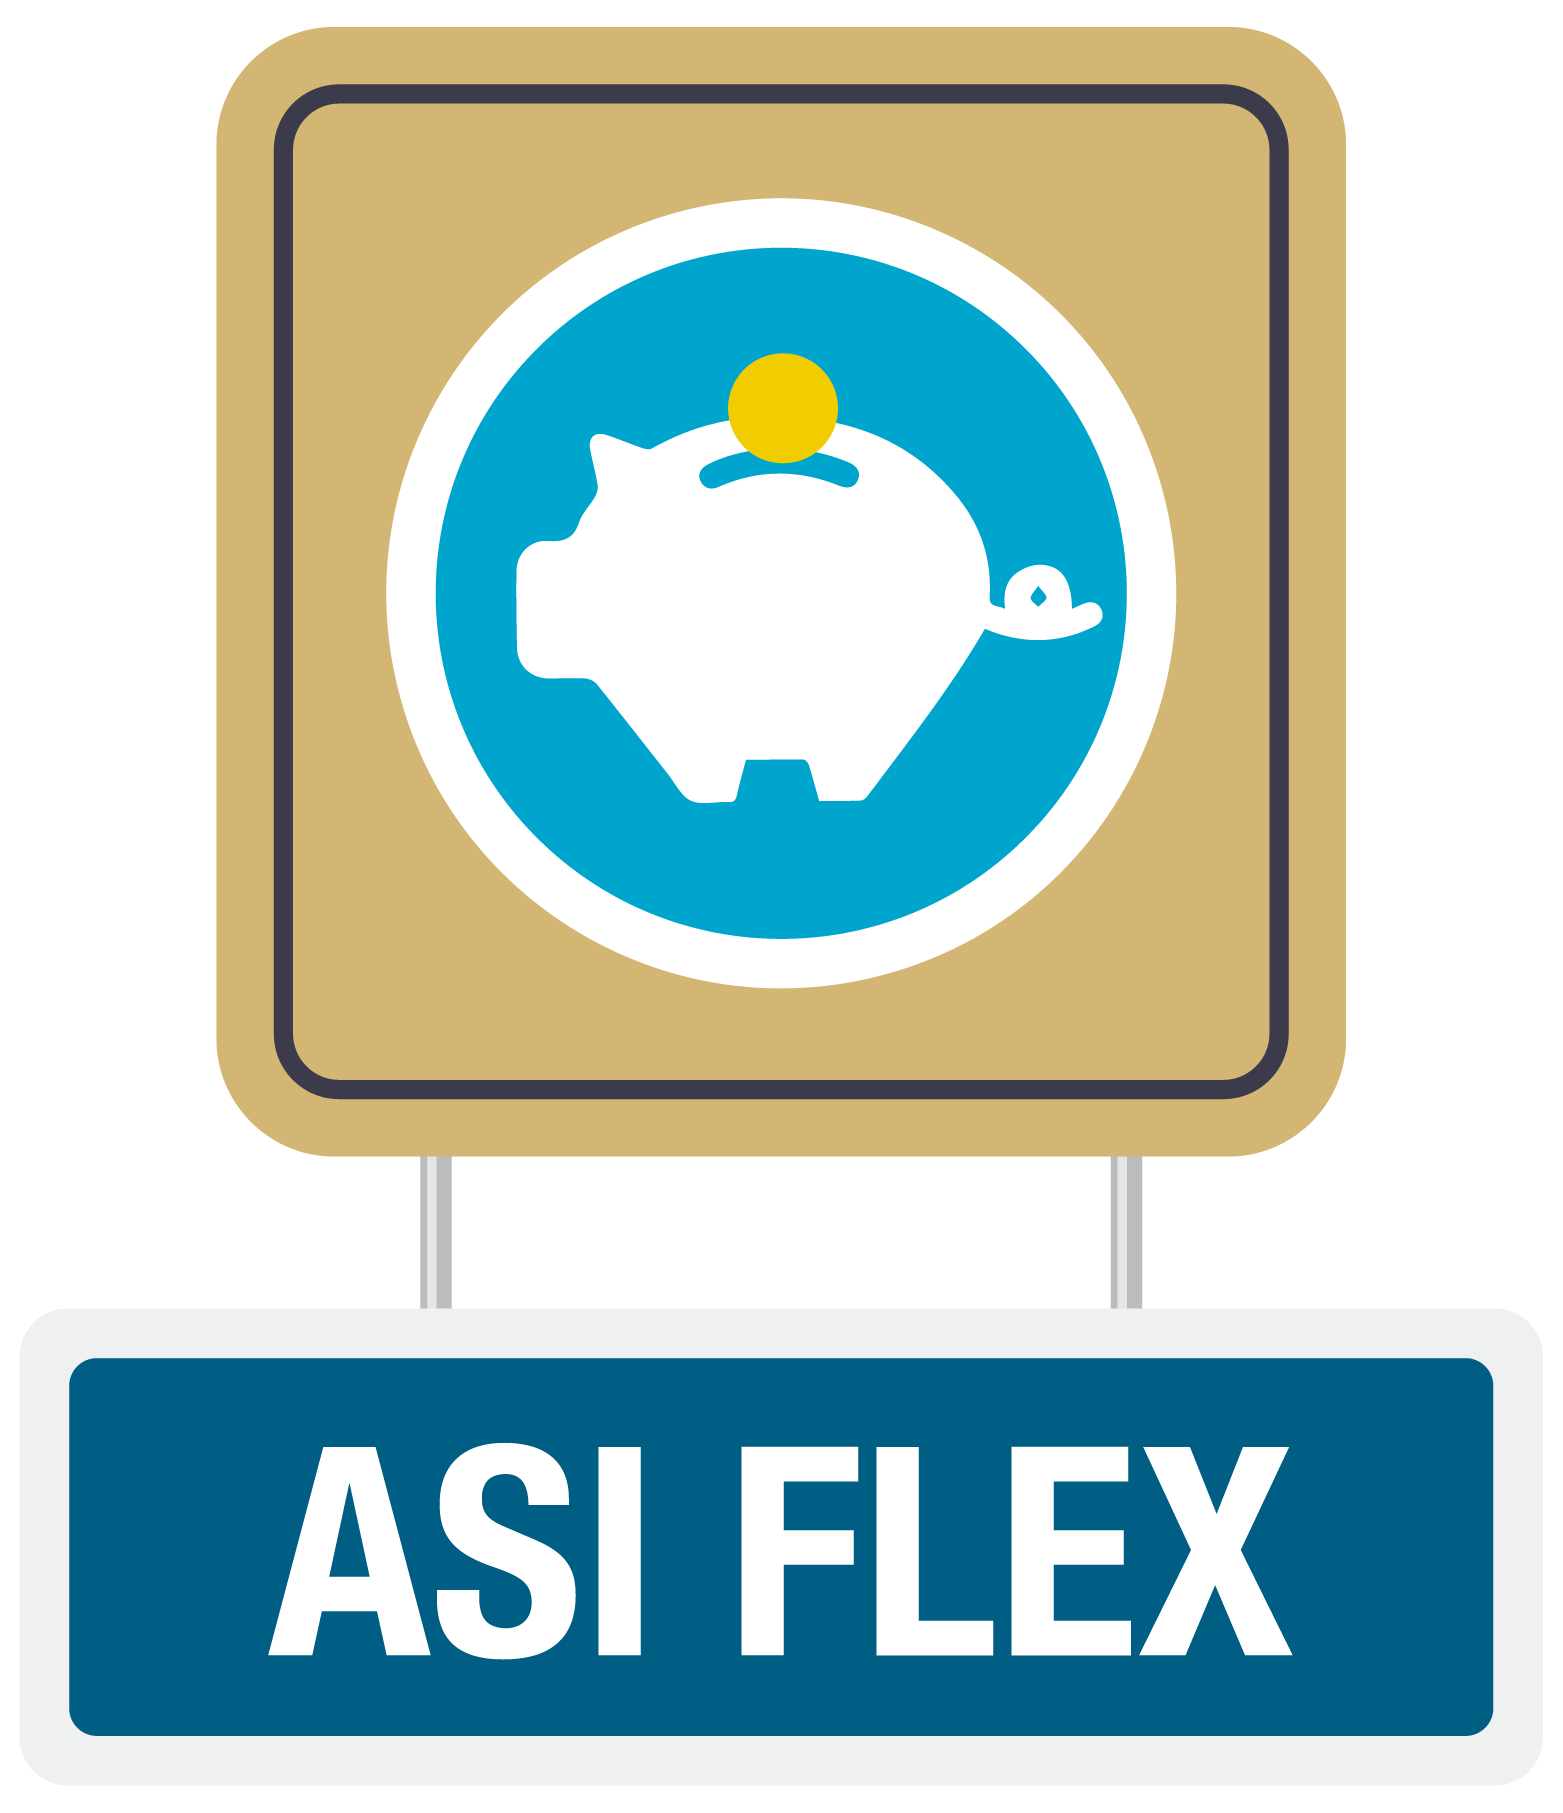 ASIFlex fair page - click to access